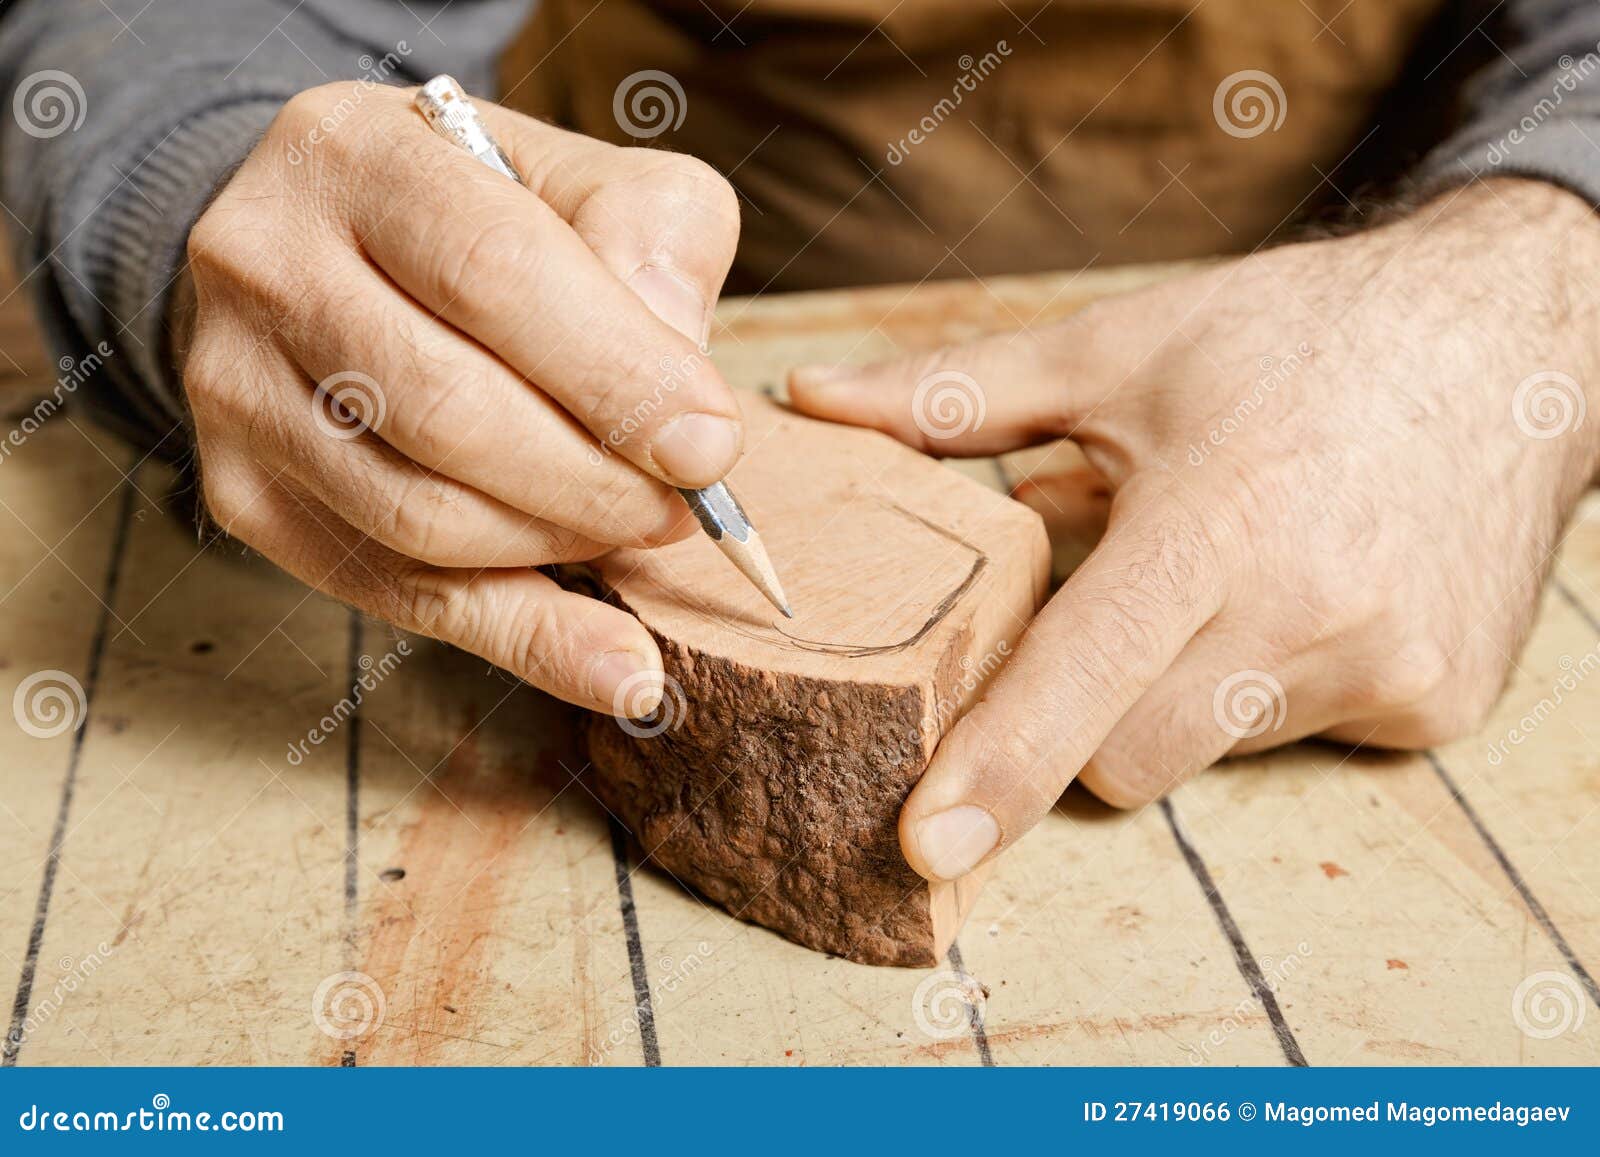 woodworker hands sketching on wood billet